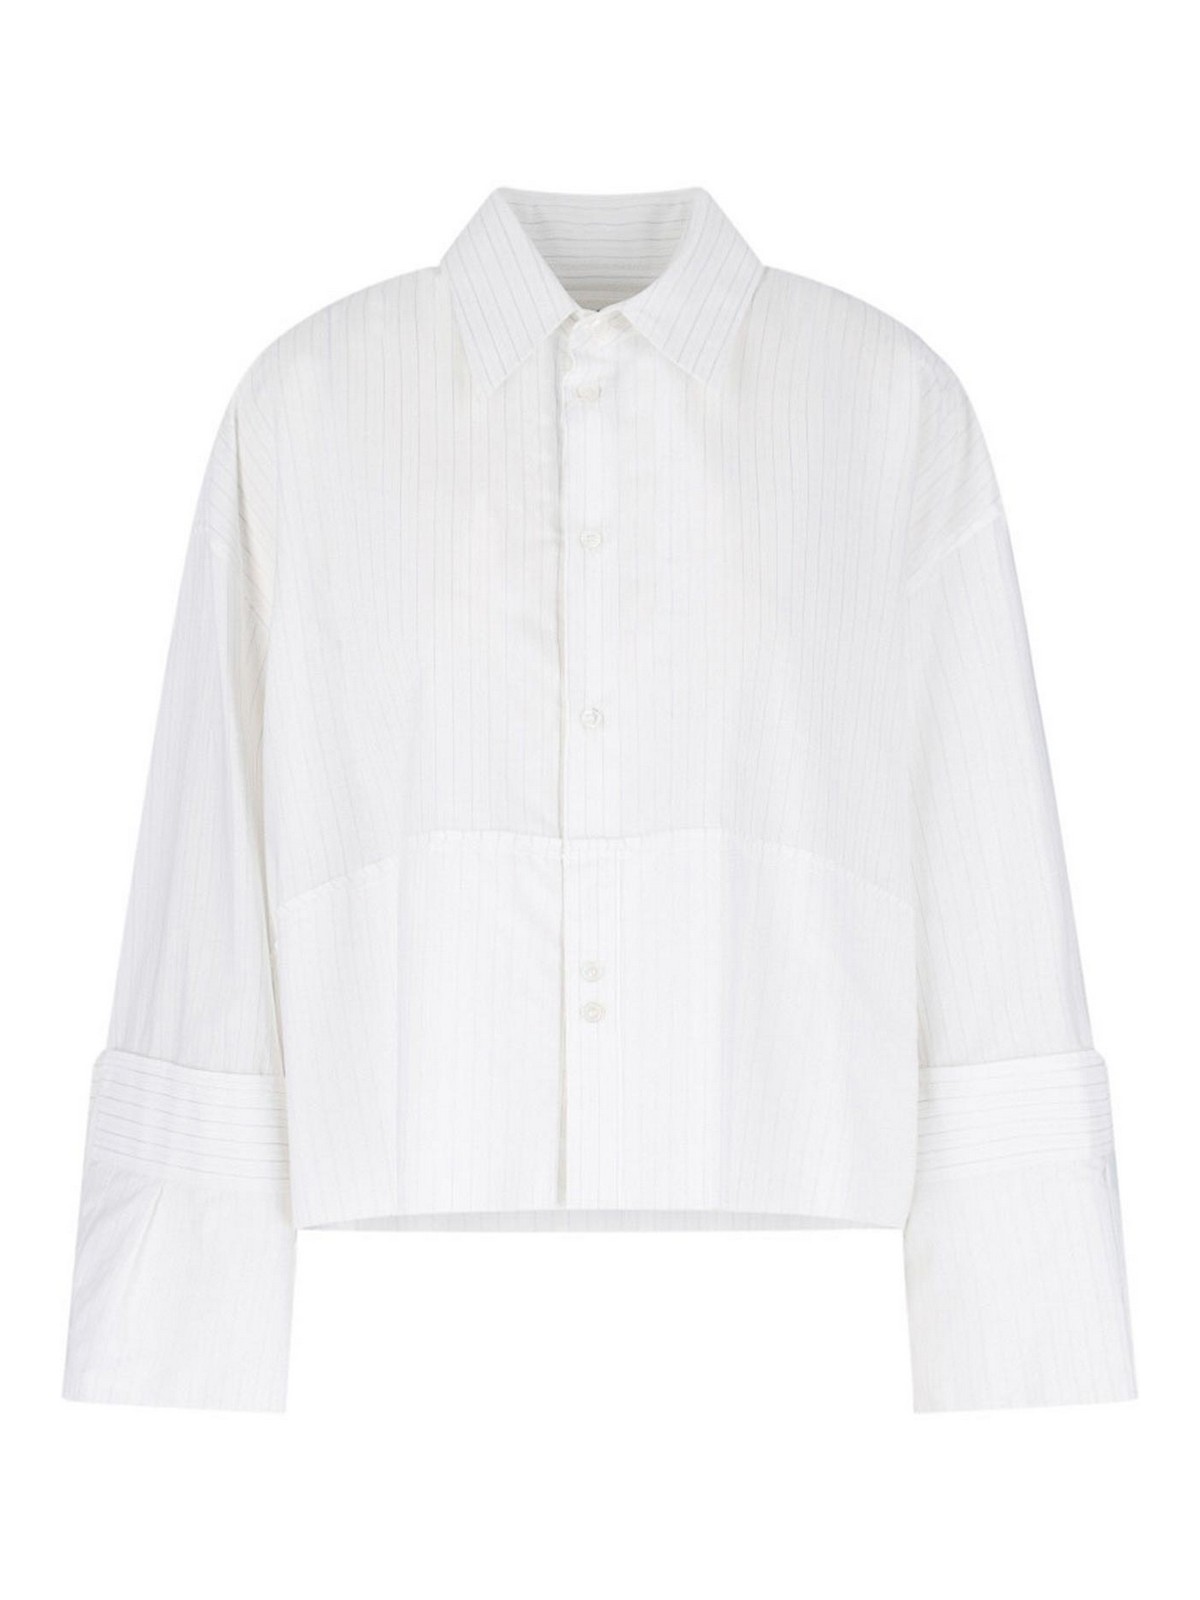 Mm6 Maison Margiela Cropped Shirt In White